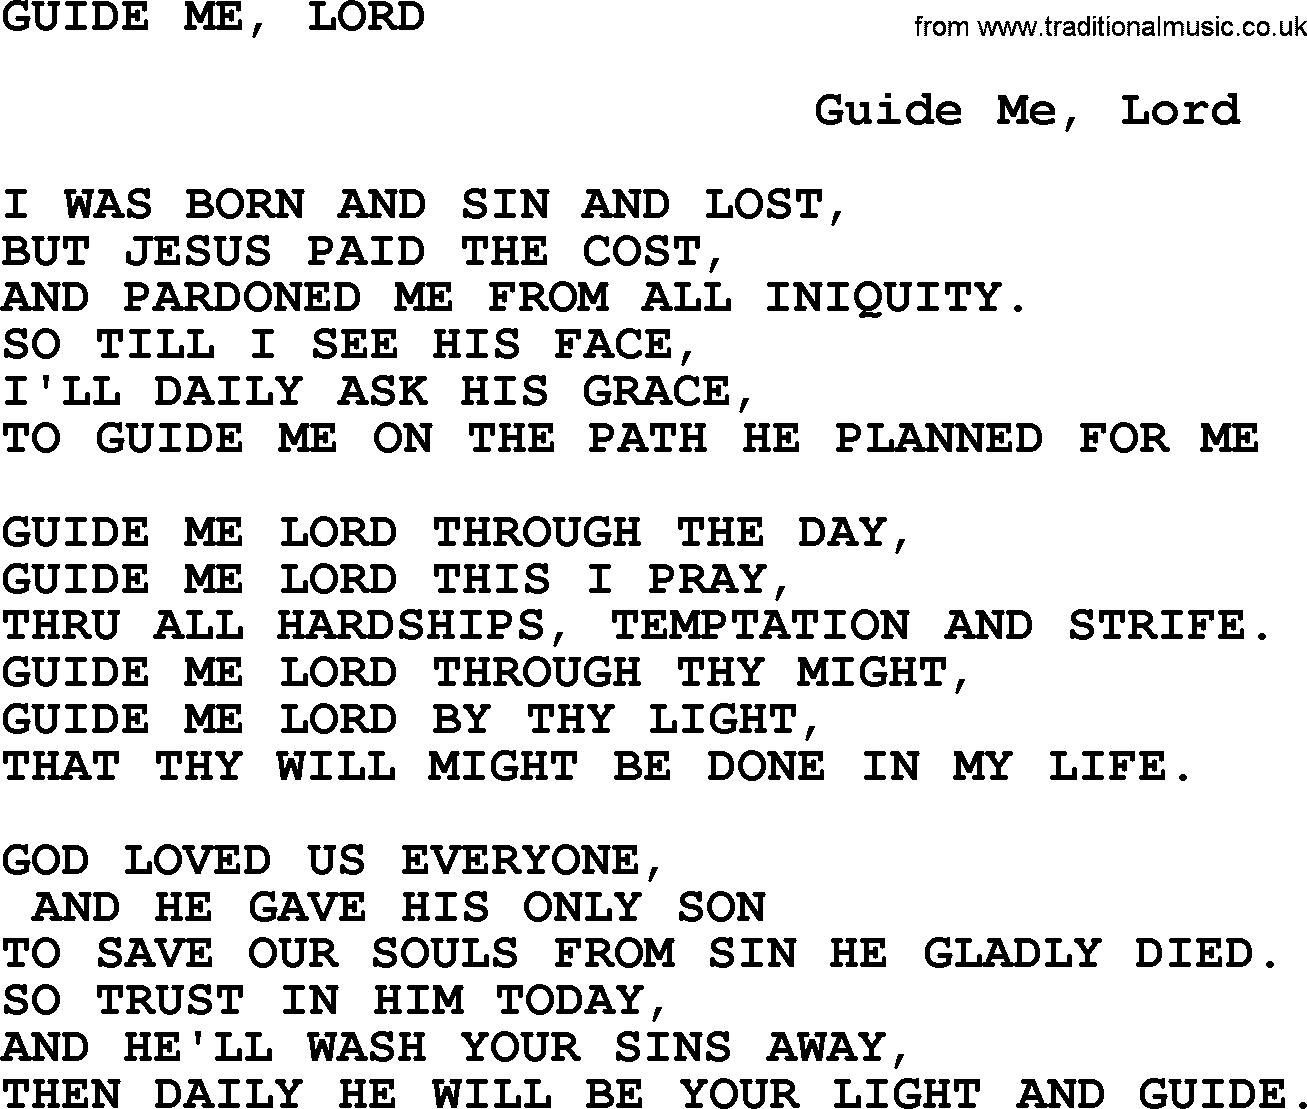 Merle Haggard song: Guide Me, Lord, lyrics.